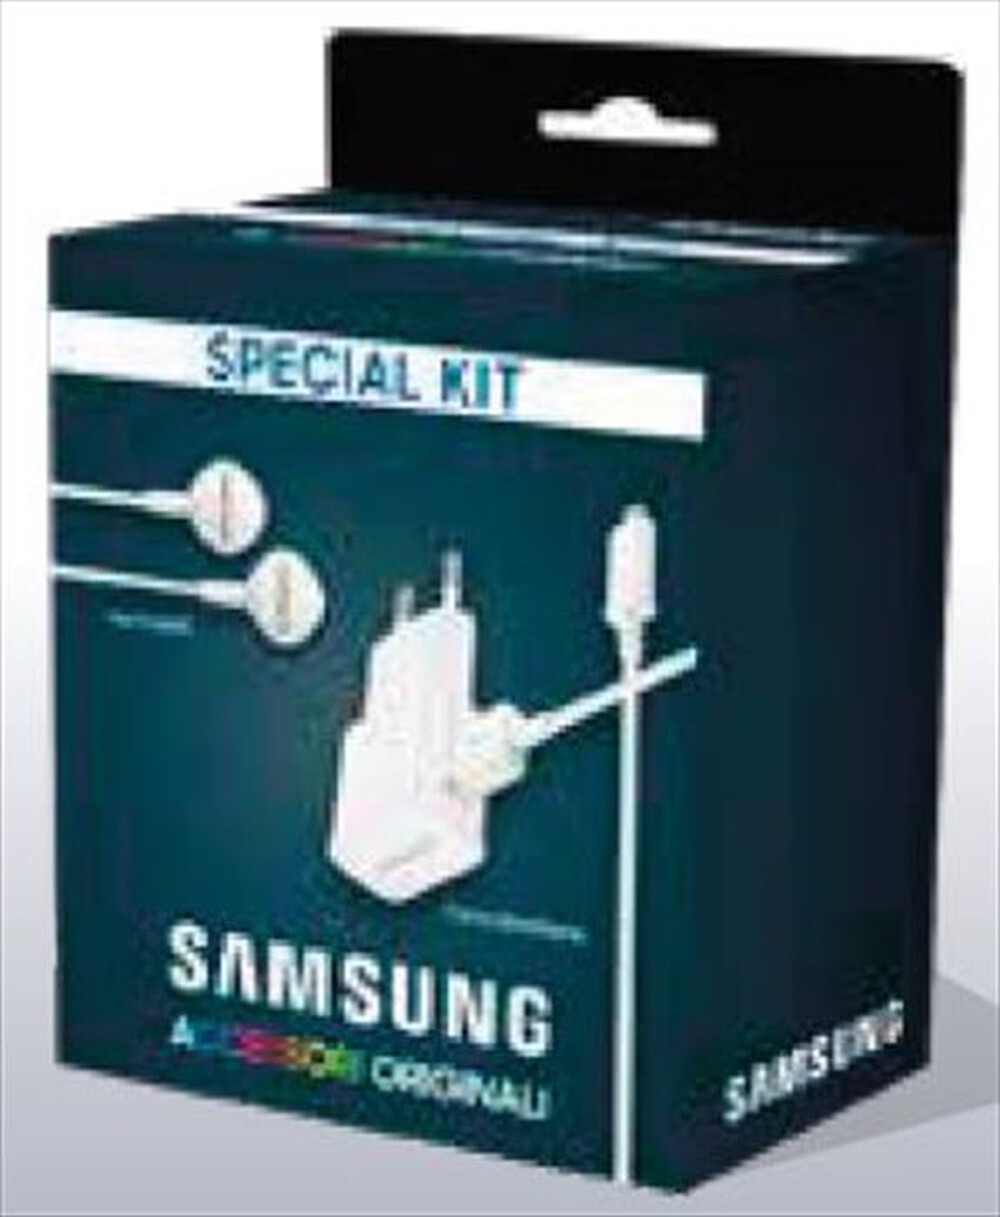 "SAMSUNG - kit samsung f spec kit ep-ta12+ auricolari eohs130"